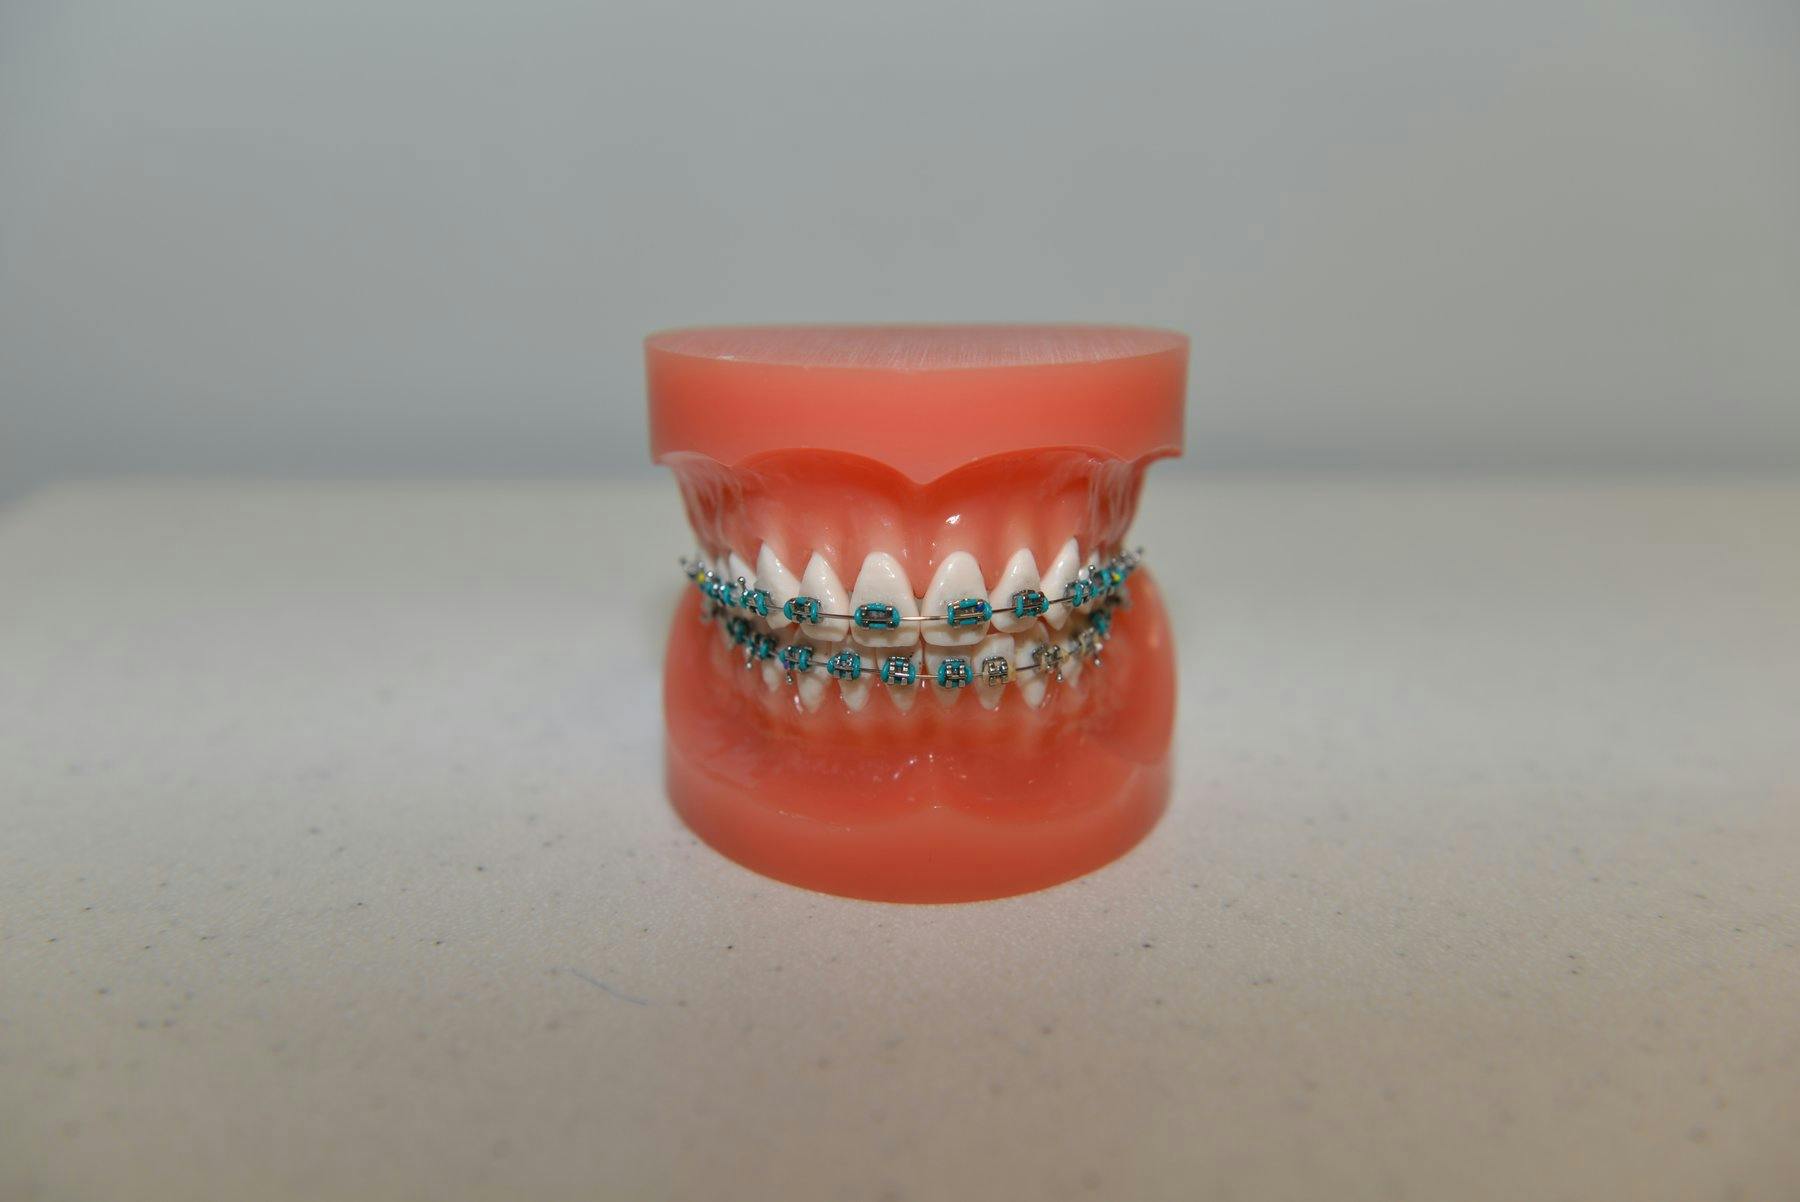 Photo of metal braces on a teeth model